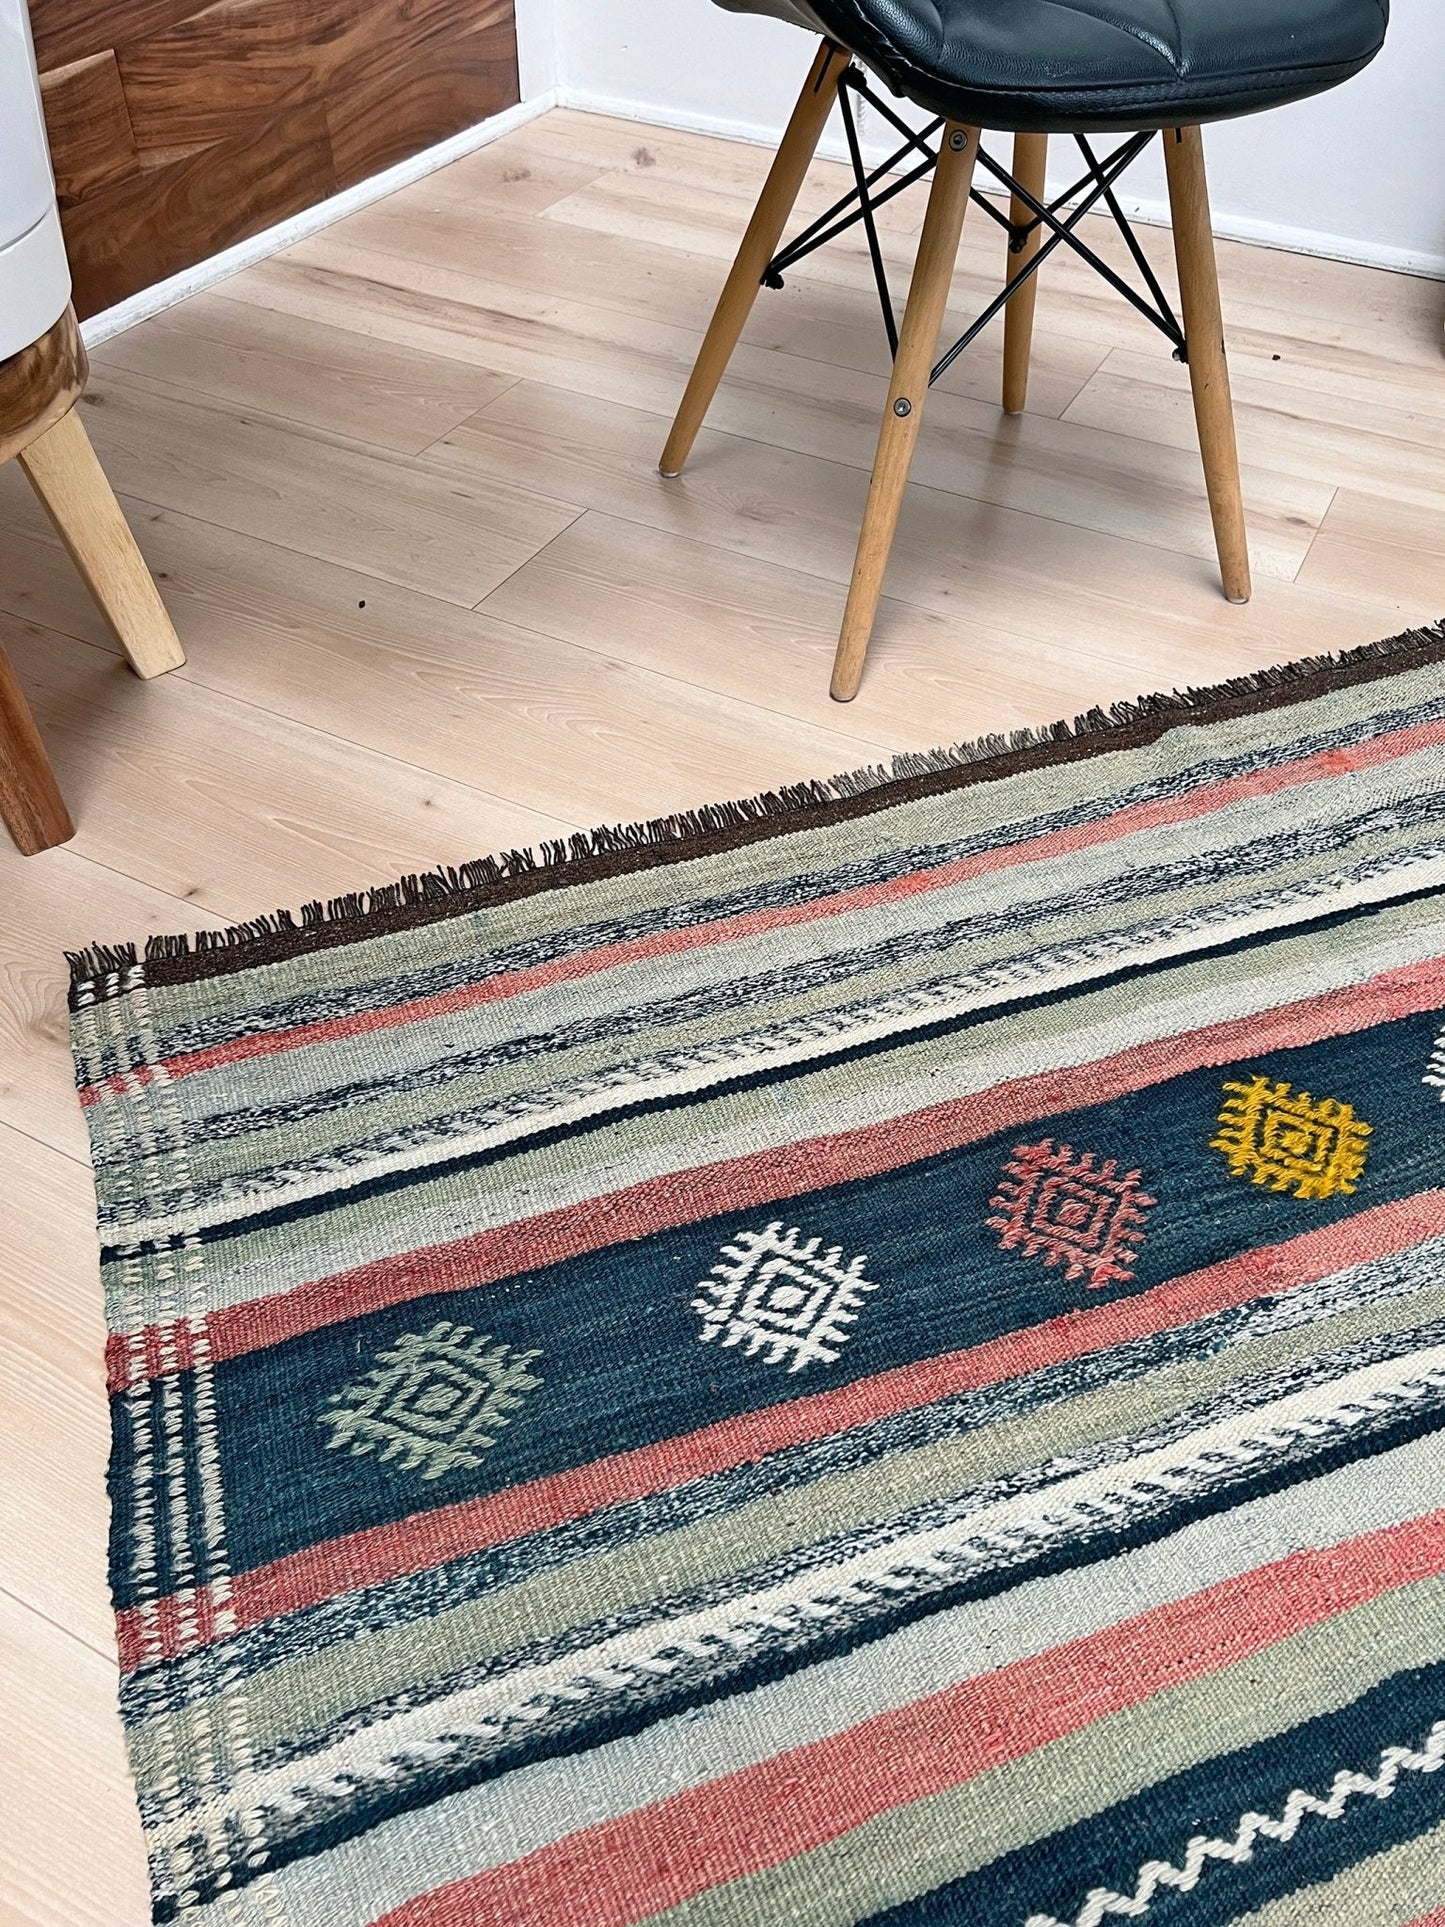 vintage turkish kilim rug in living room setting, bright colors, indigo rugs, soft rug, bold color, San Francisco Bay Area, California, rug store, rug shop, local shop, vintage rug, modern kilim, warm colors, antique rug, antique kilim.